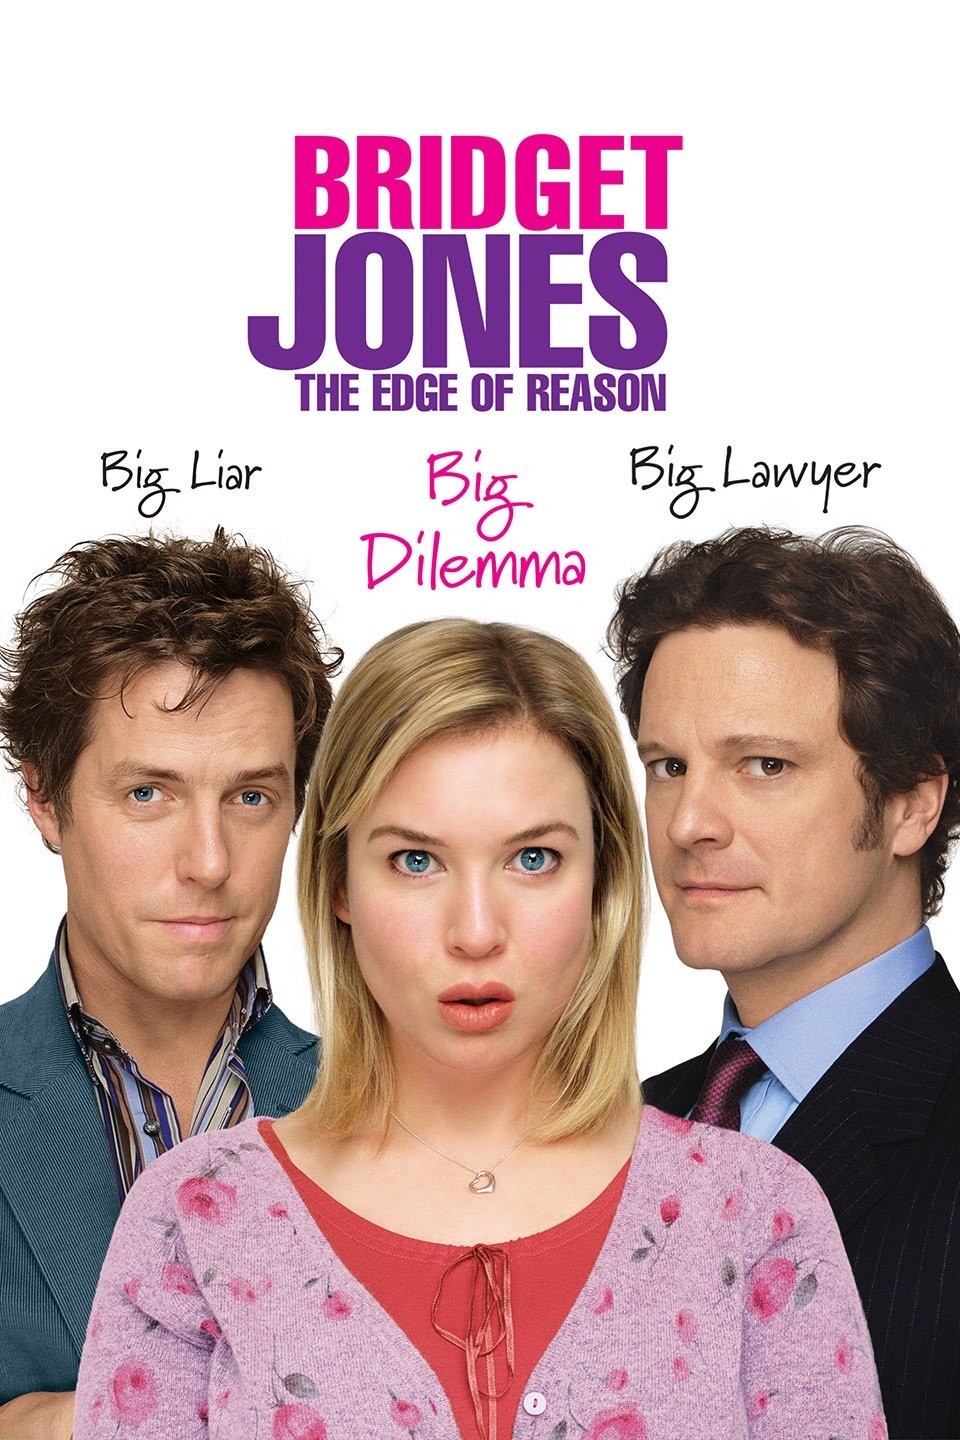 Bridget Jones - Am Rande des Wahnsinns : Movies & TV 